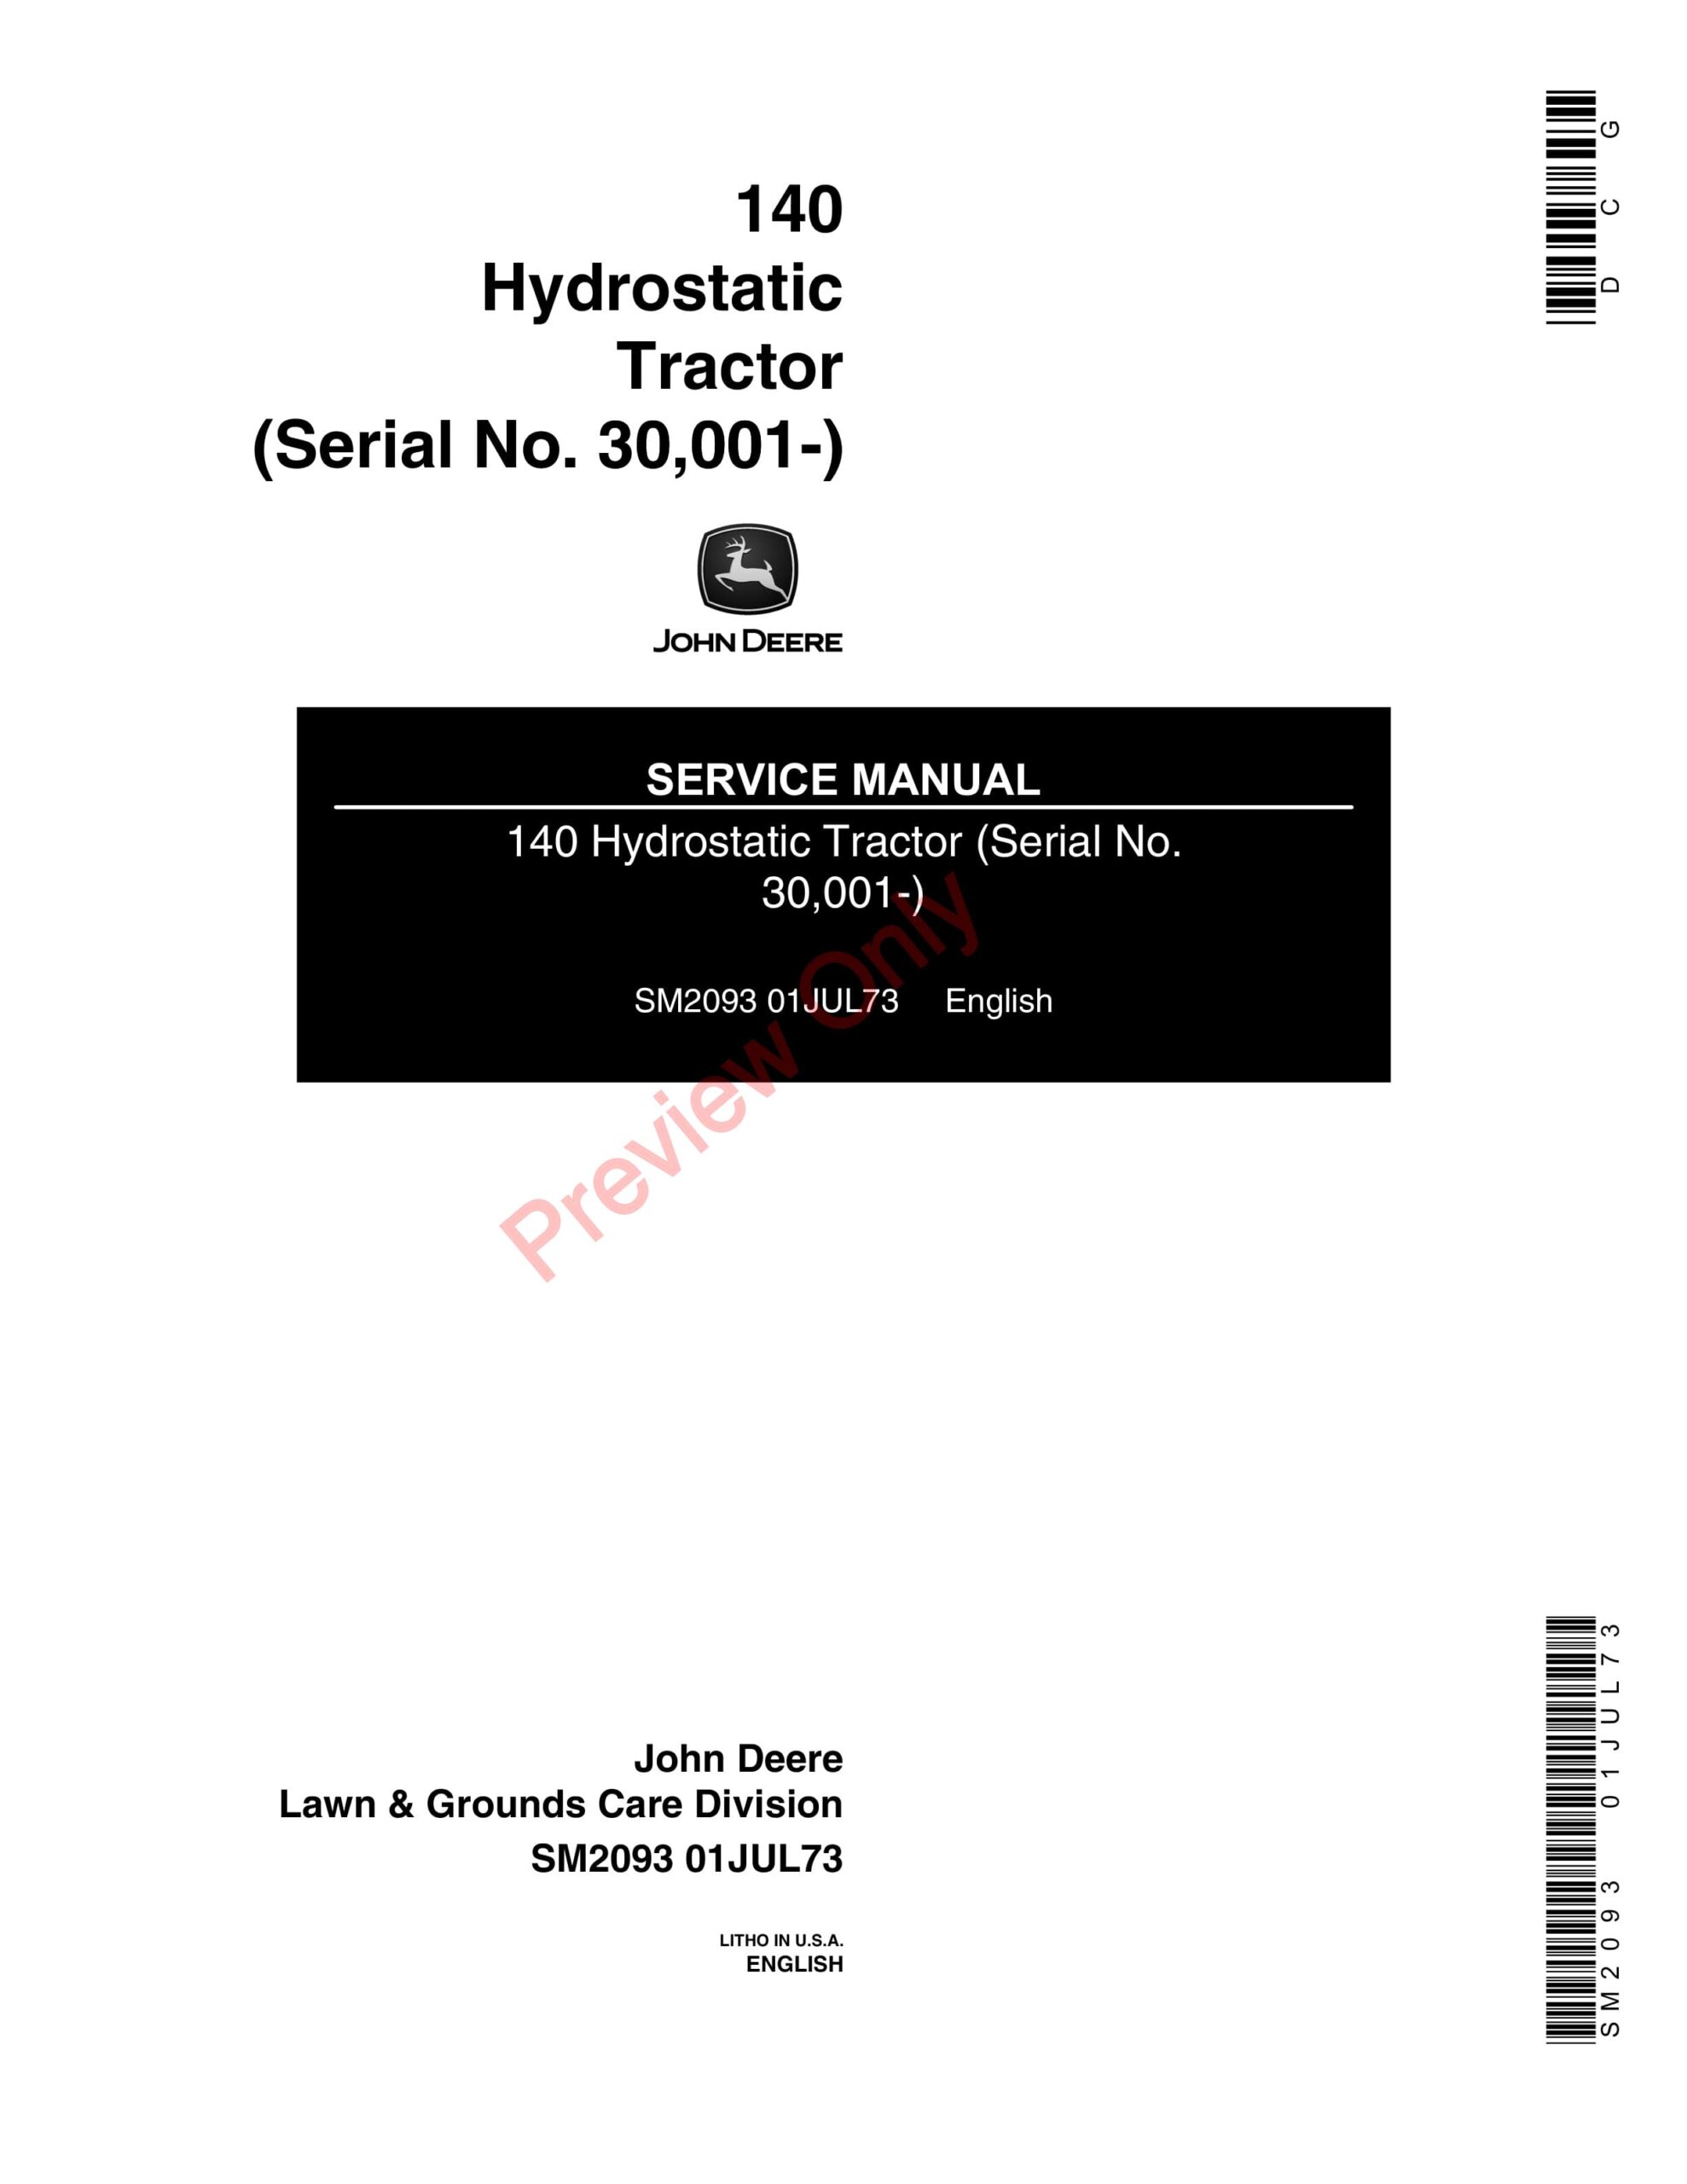 John Deere 140 Hydrostatic Tractor Service Manual SM2093 01JUL73-1